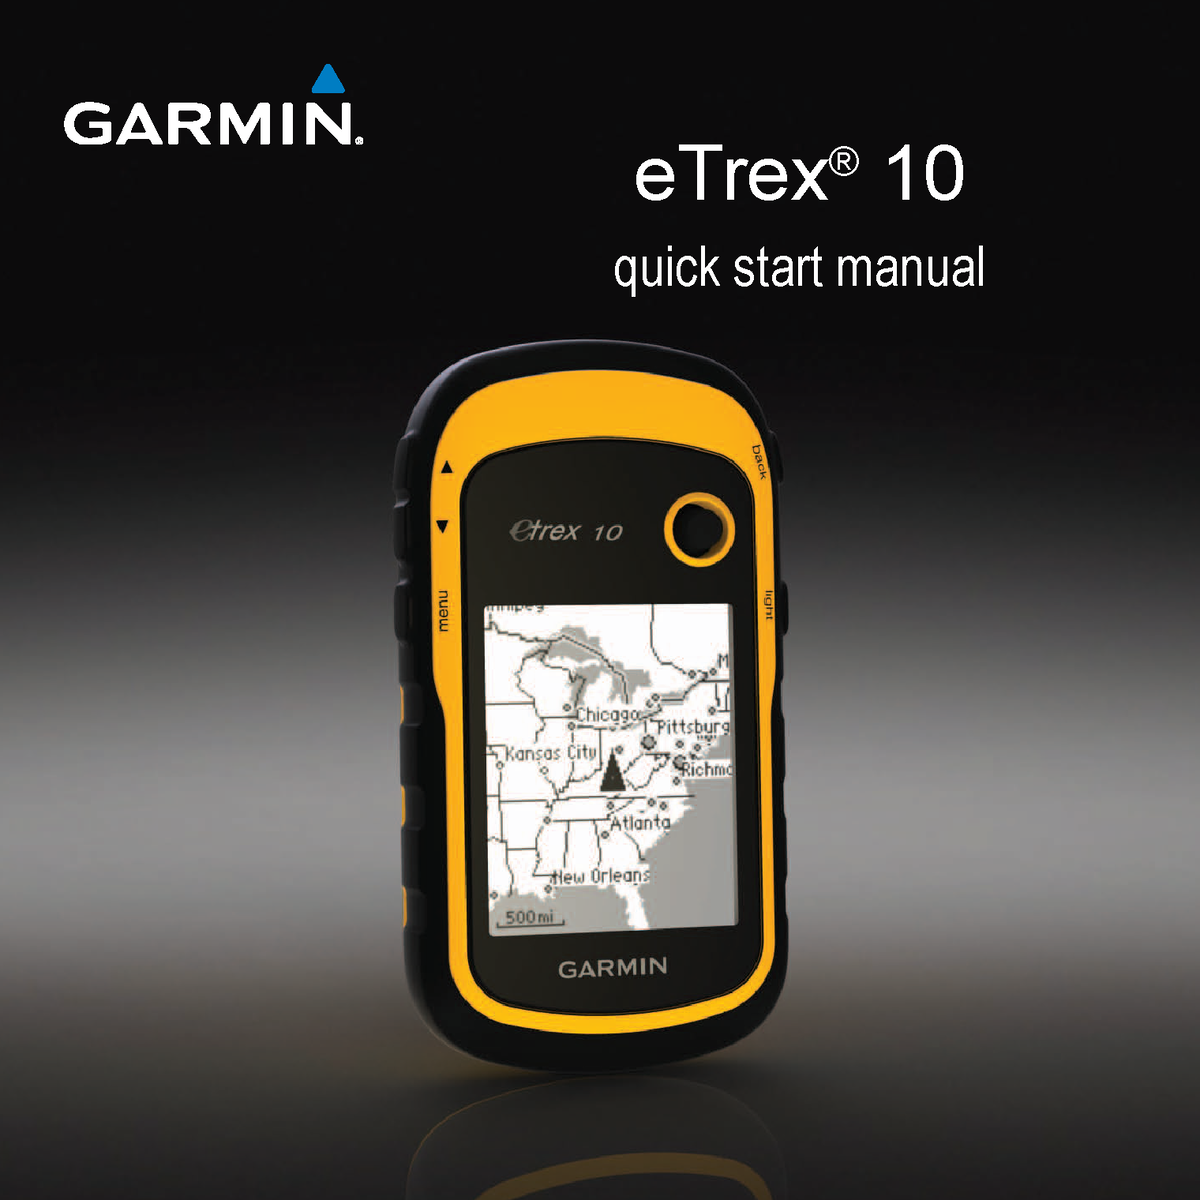 Etrex 10 QSM EN - eTrex ® 10 quick start manual 2 eTrex 10 Quick Start  Manual Getting Started ‹ - StuDocu